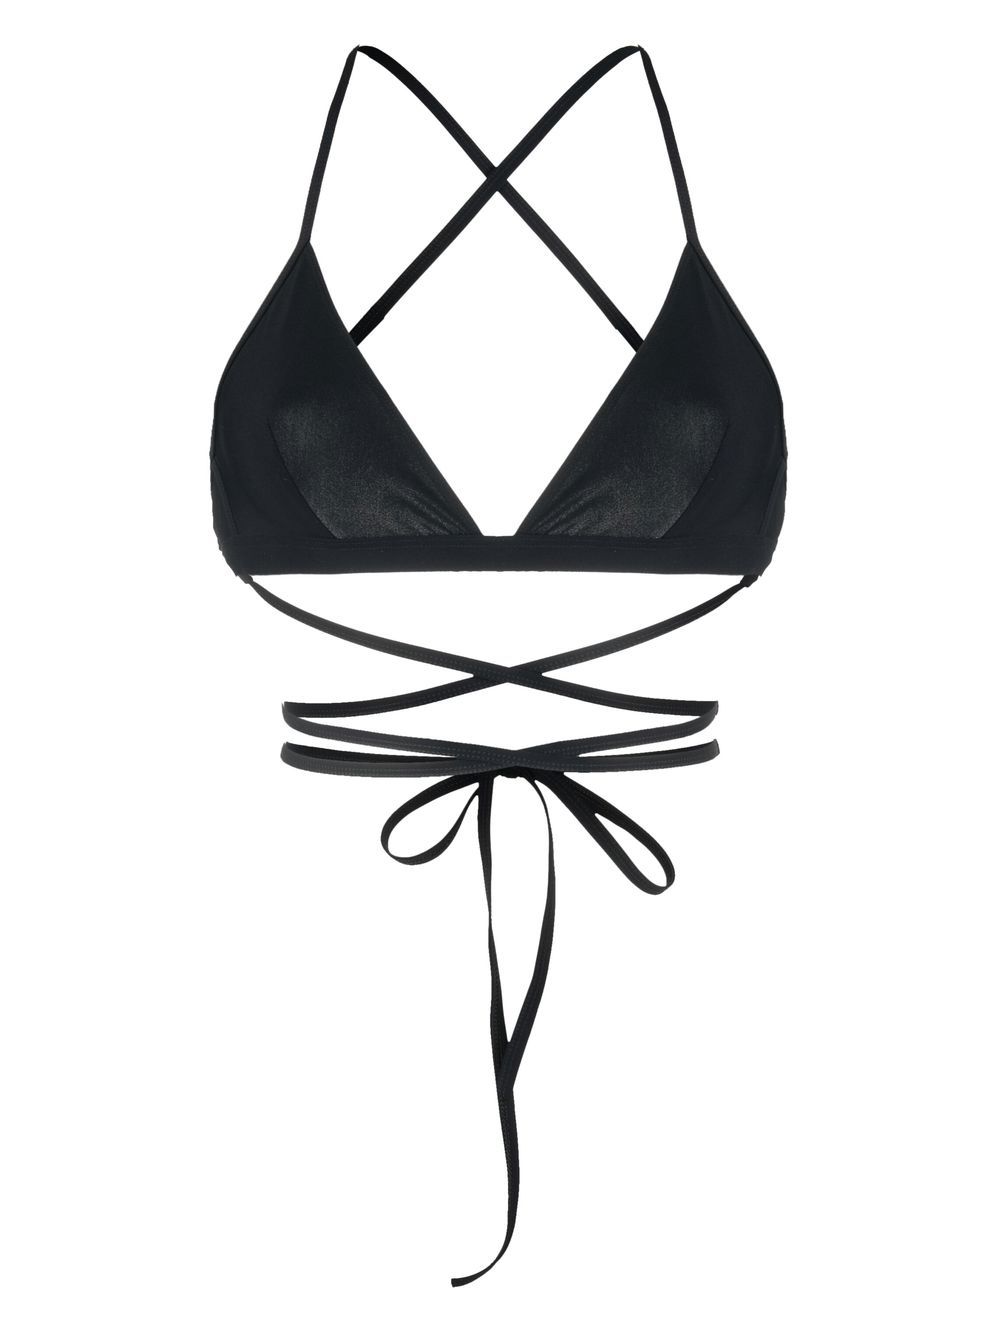 Isabel Marant Solange crossover-strap bikini top - Black